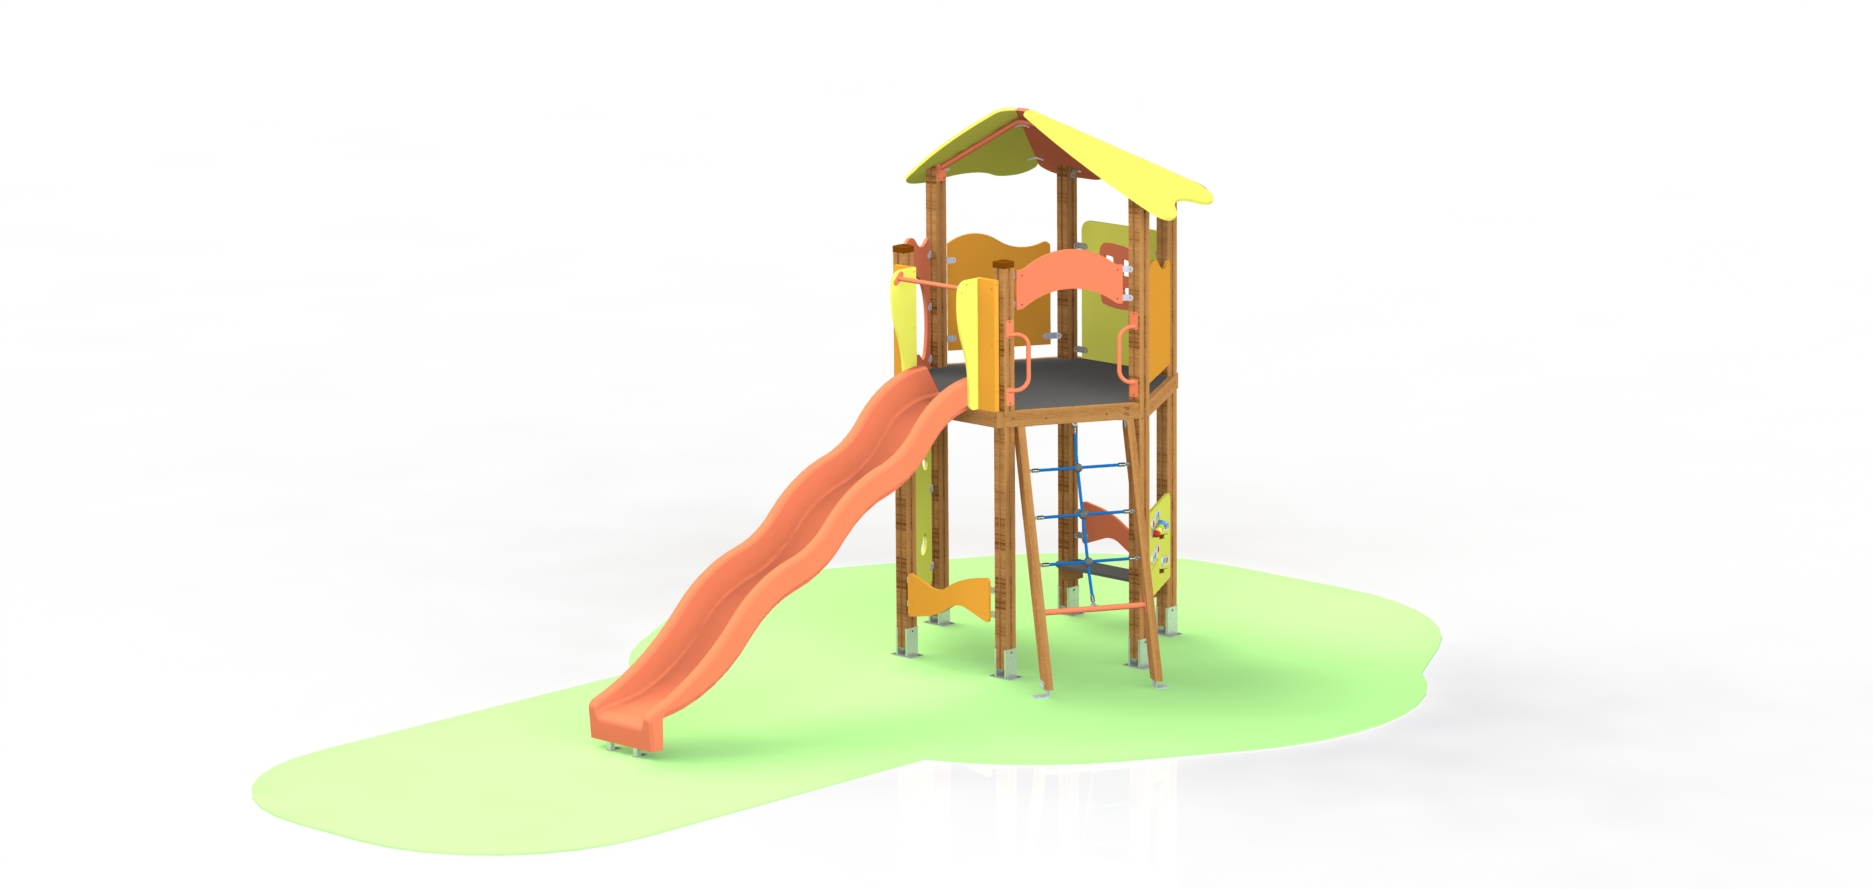 Combined playground equipment, model КД08